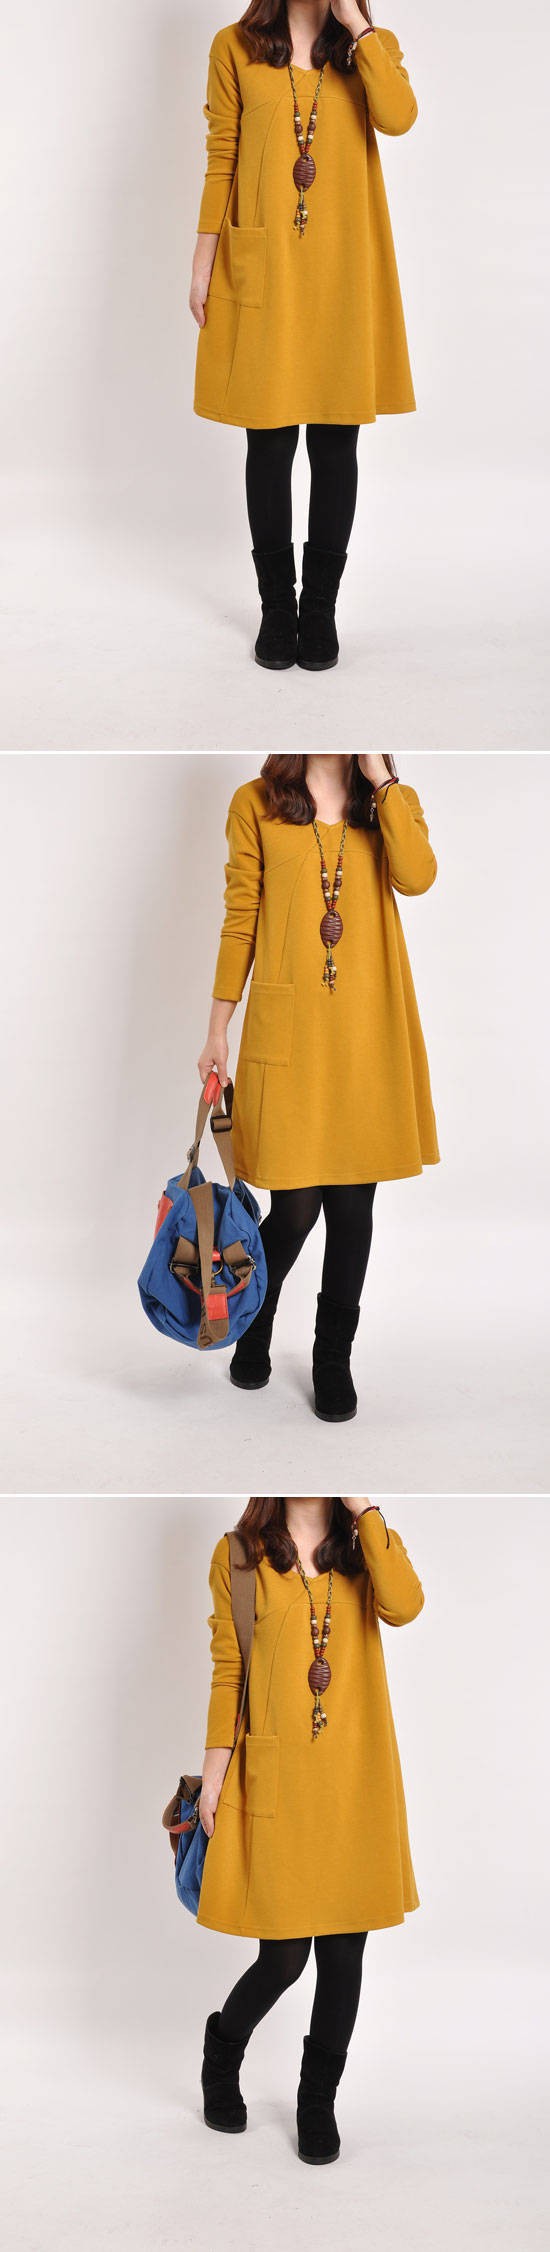 Autumn-Winter-Fashion-Korean-Style-Women-Casual-Dress-Long-Sleeve-With-Pockets-Big-Size-Bottom-Dress-32323944299